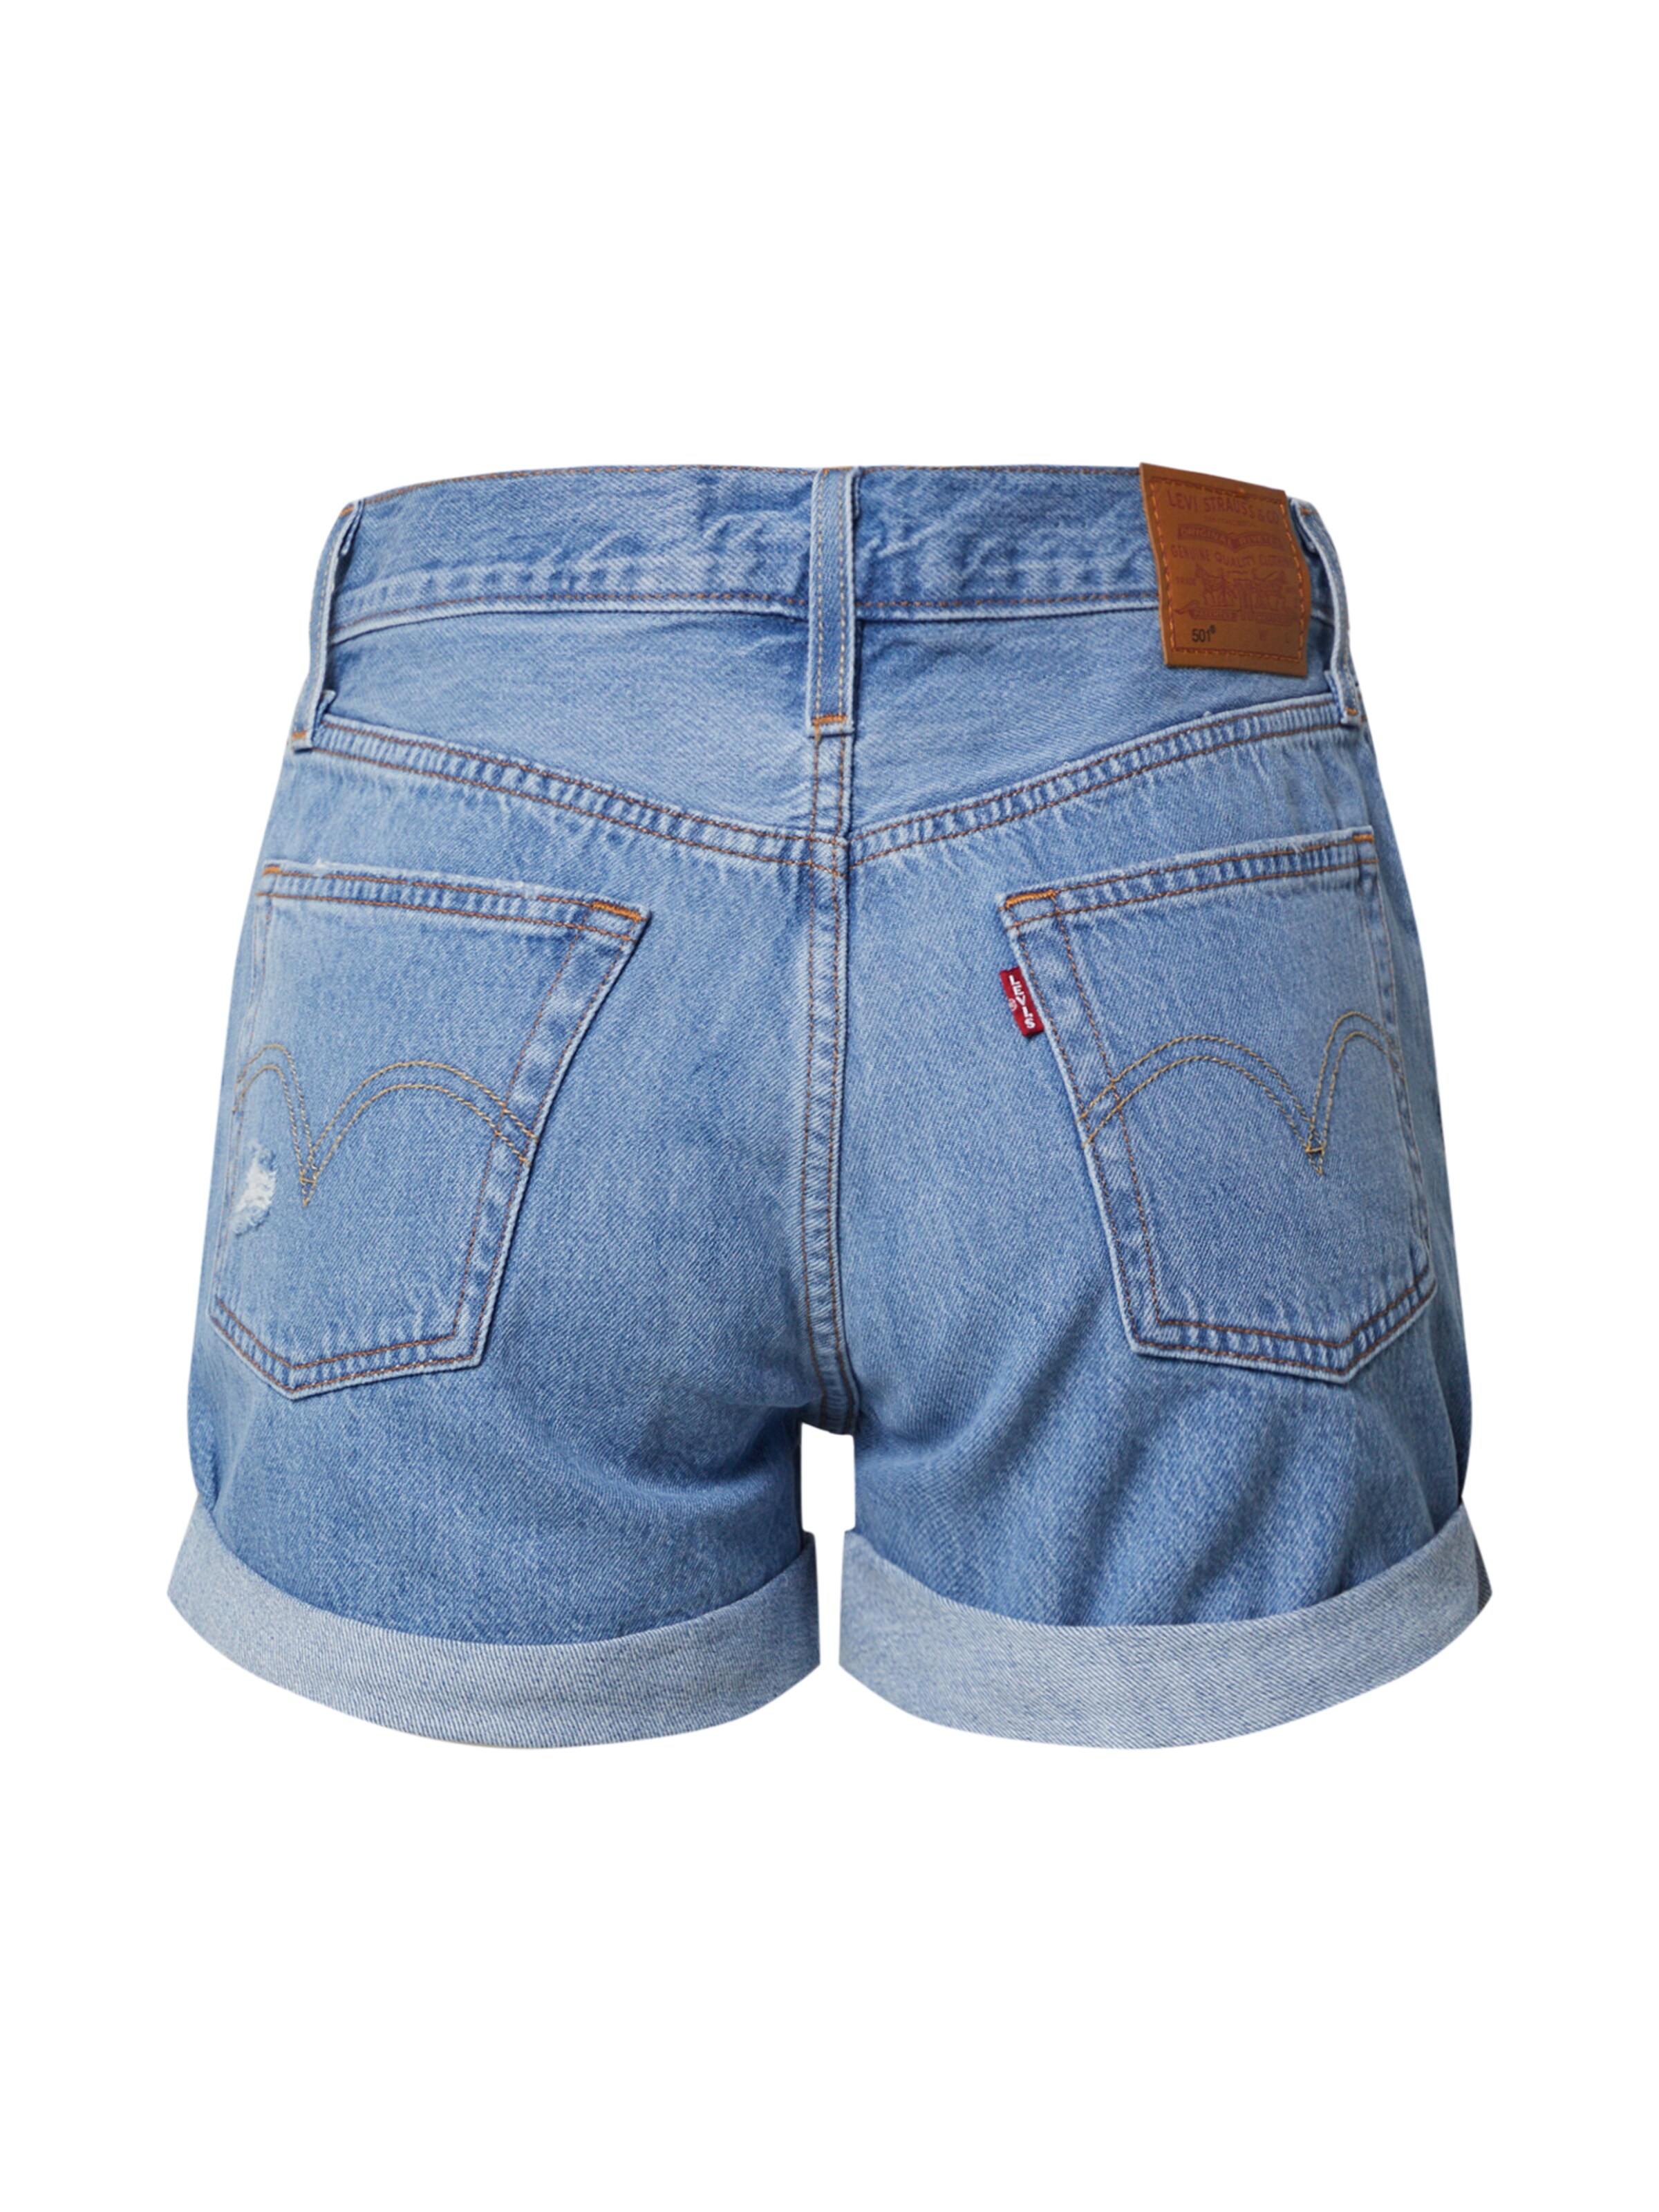 LEVIS Shorts 501® SHORT LONG in Blau 